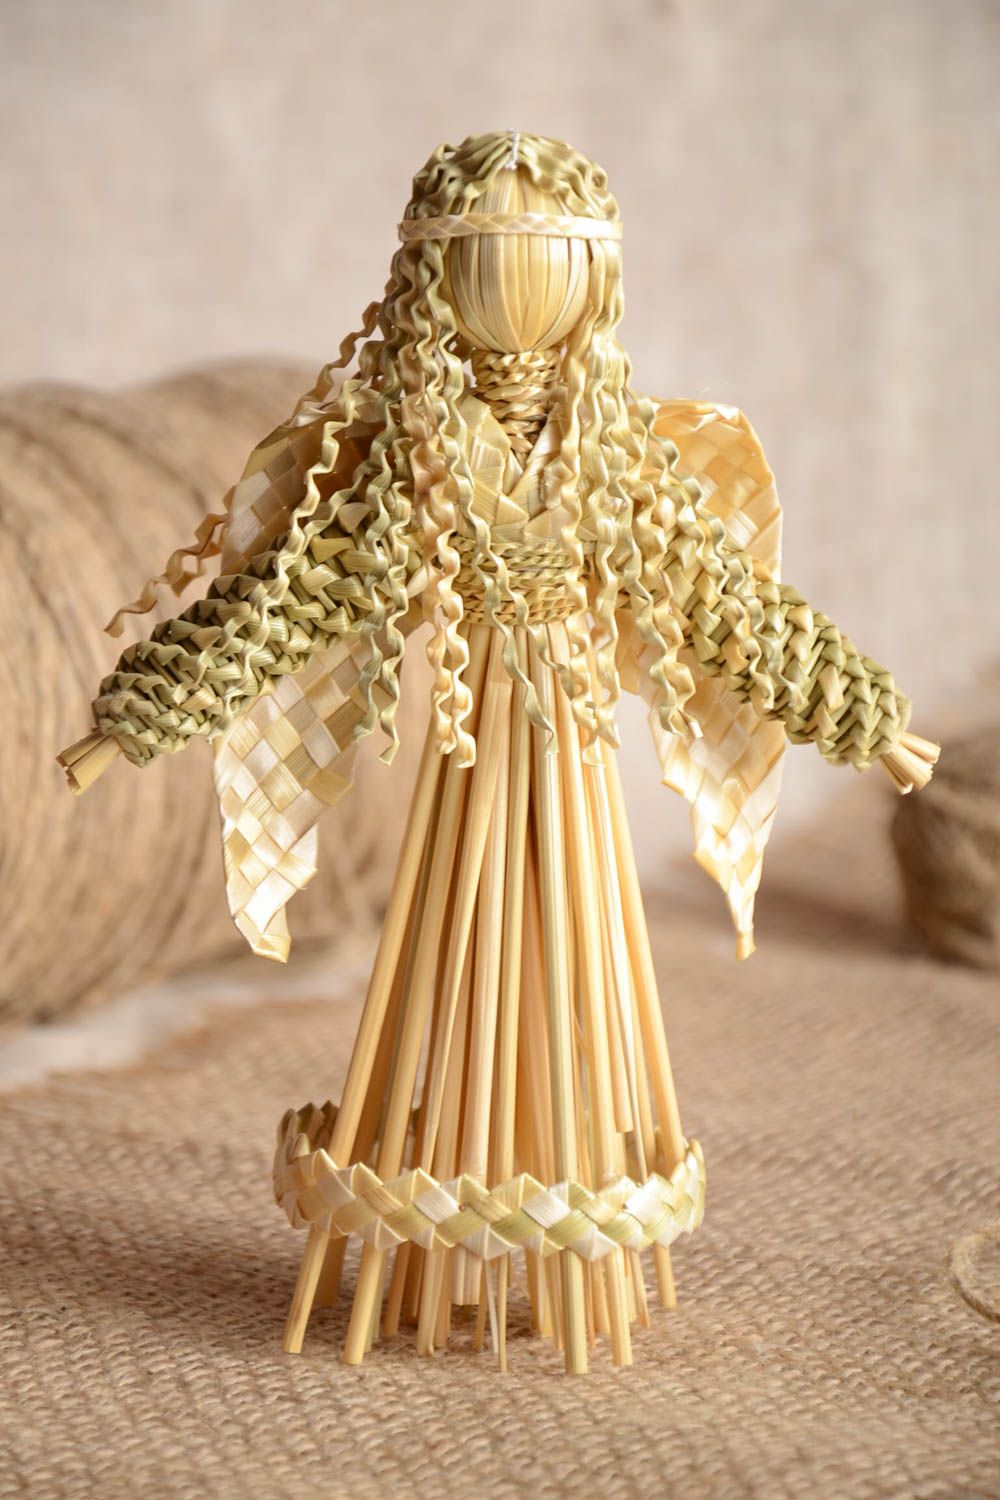 Decorative toy made of natural straw stylish interior decor beautiful angel photo 1